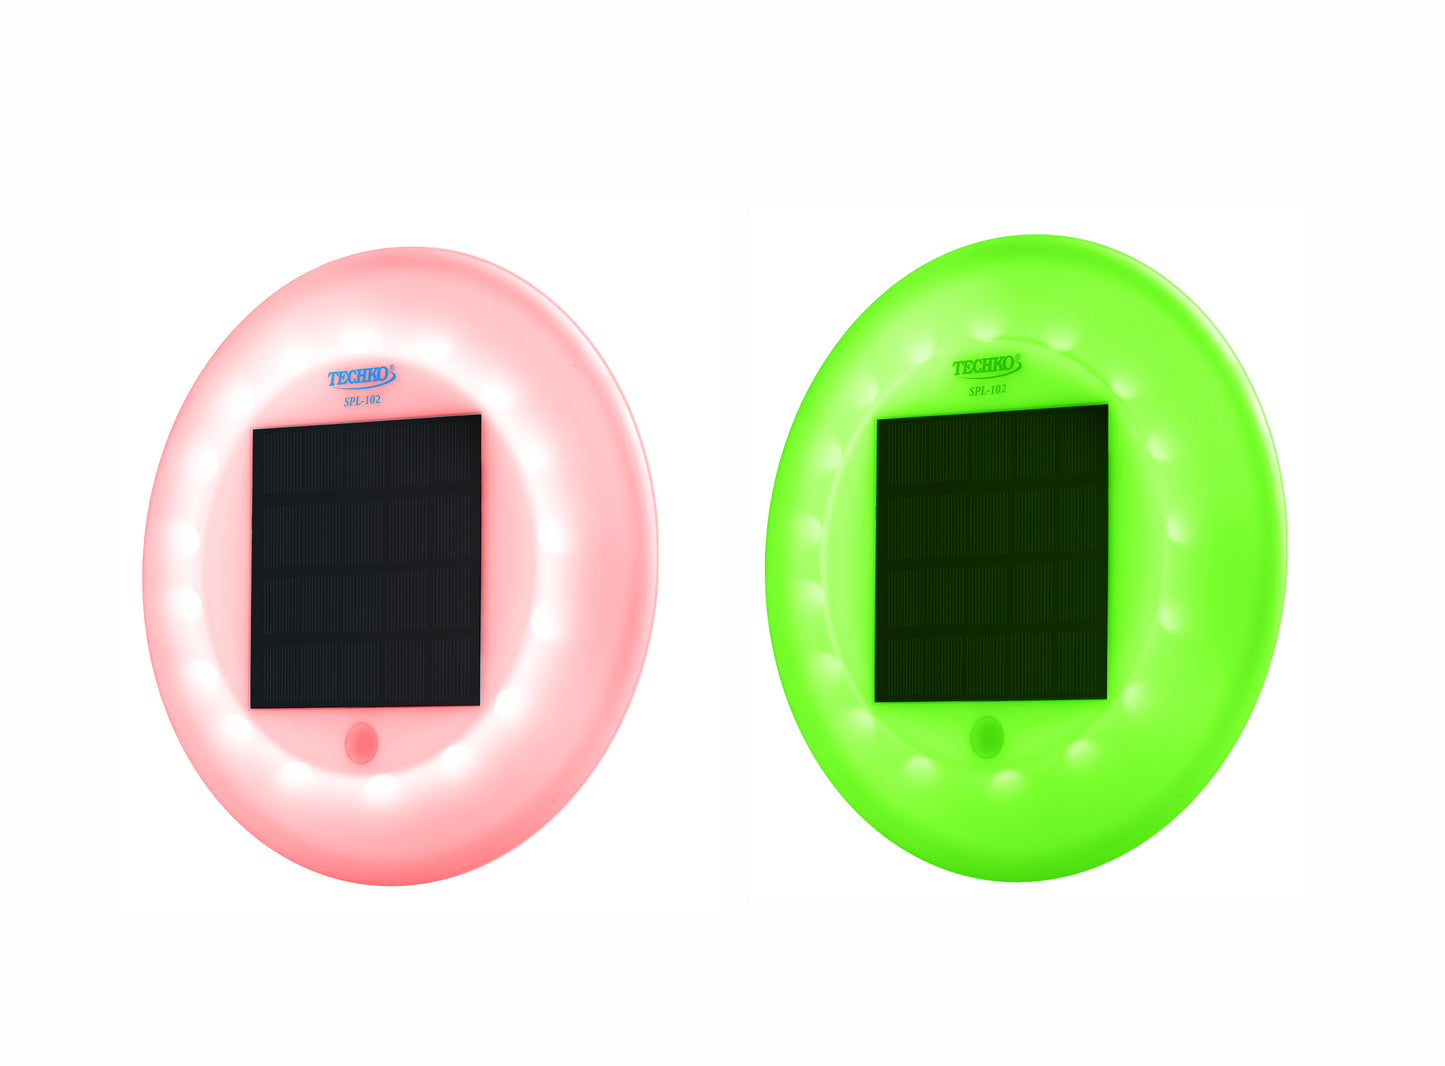 Solar Floating Multi-color Pool Light Model (2-Pack)